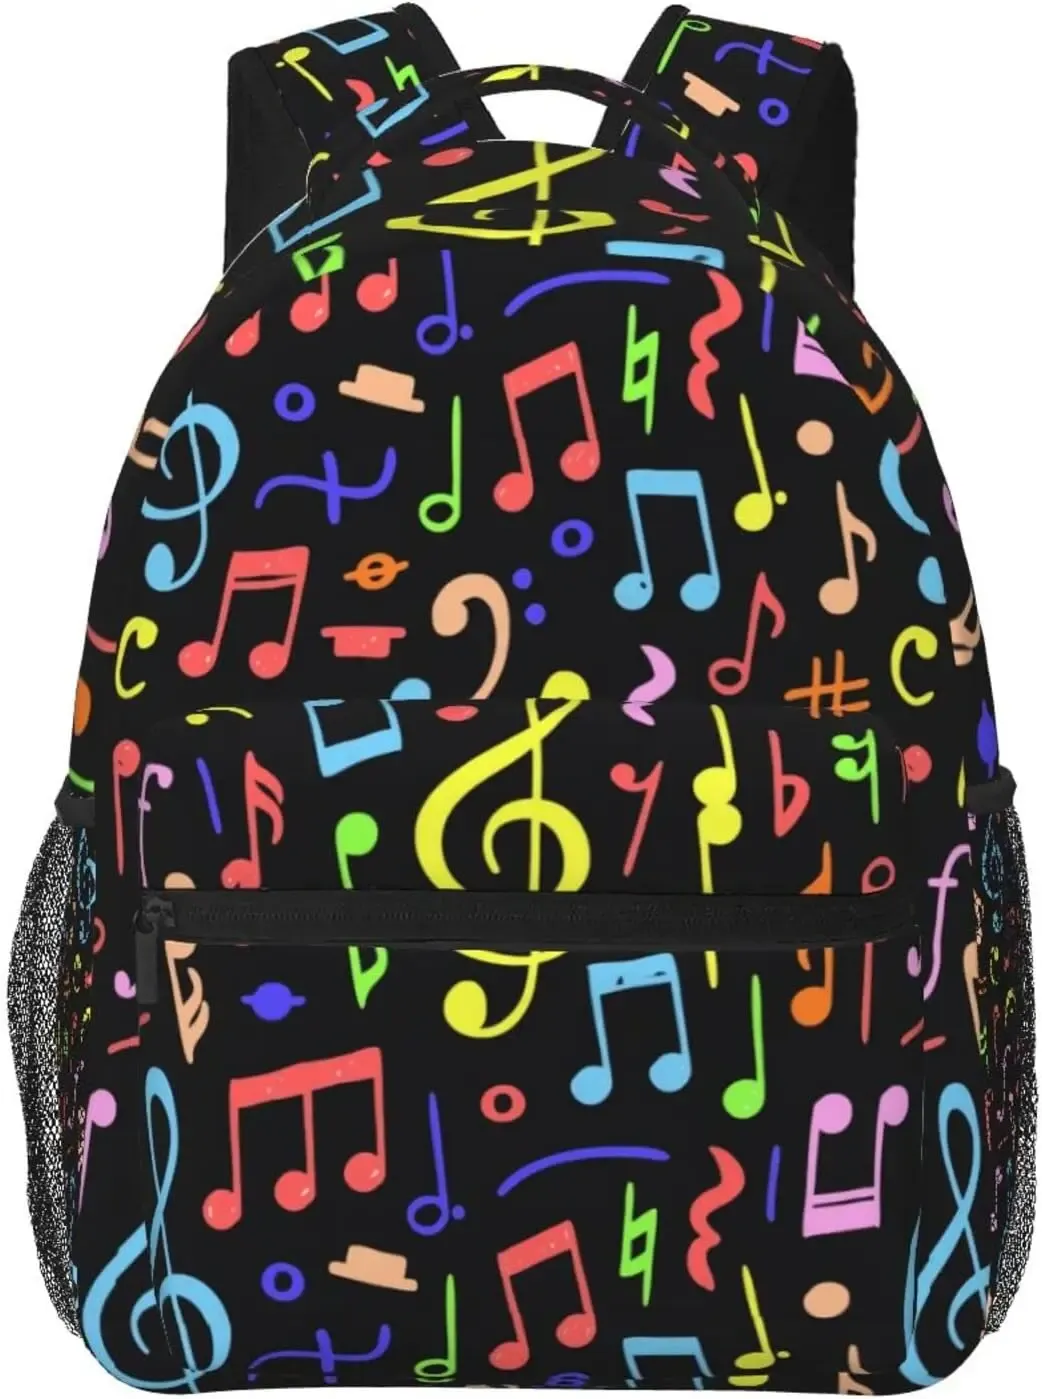 Backpack Music Note Piano Keys Backpacks Cute Laptop Bookbag Computer Bag Hiking Travel Daypack for Women Men